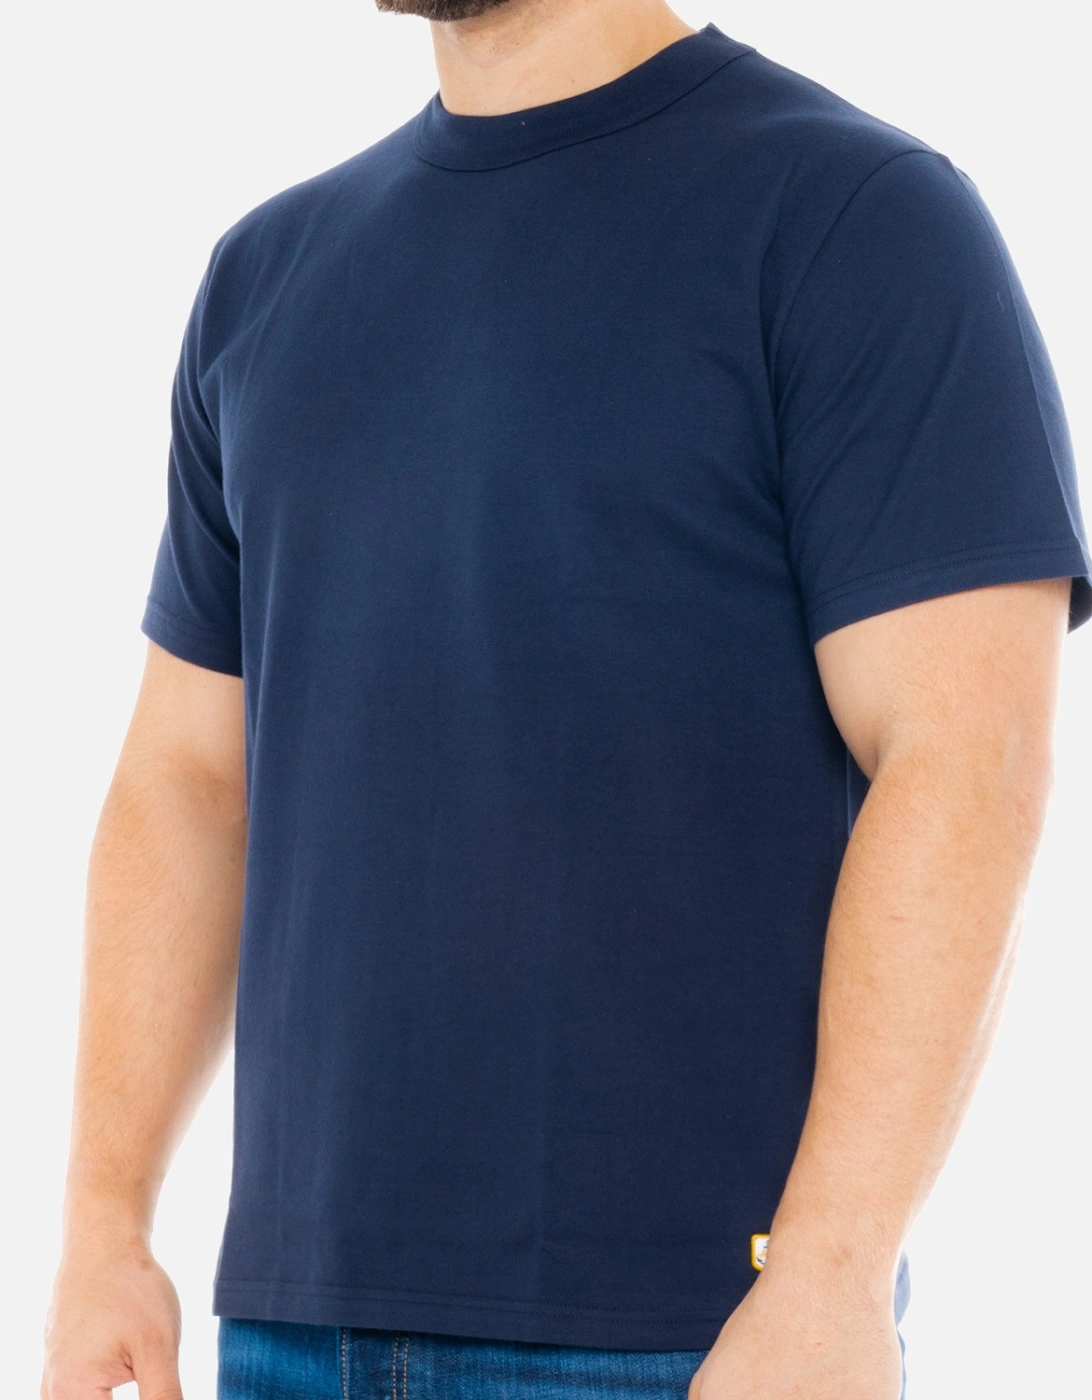 Armor Lux Mens Heritage Plain T-Shirt (Coral)